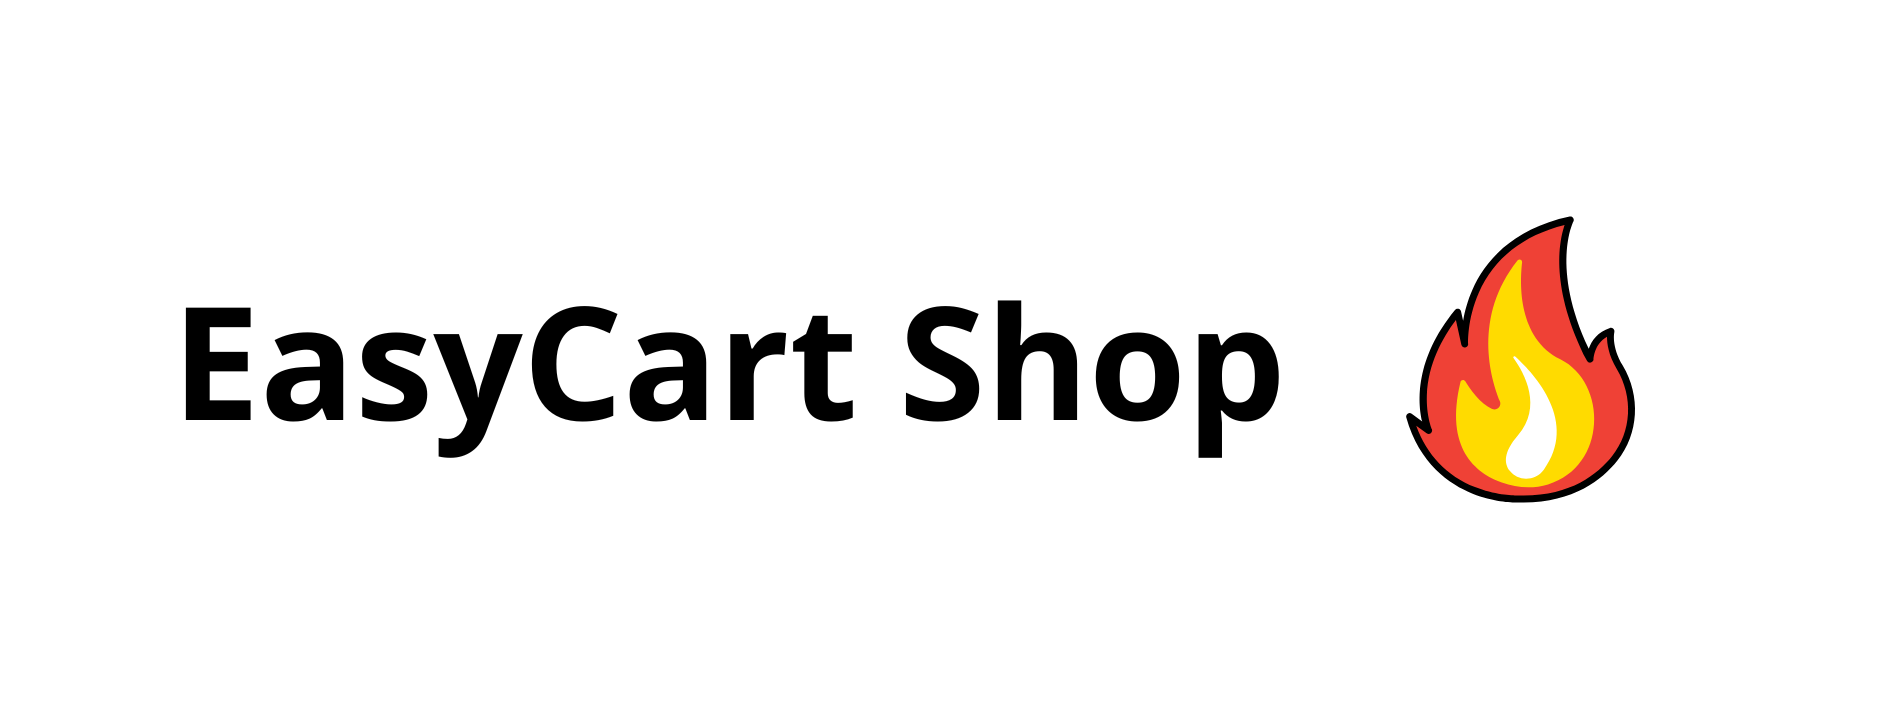 EasyCart Shop